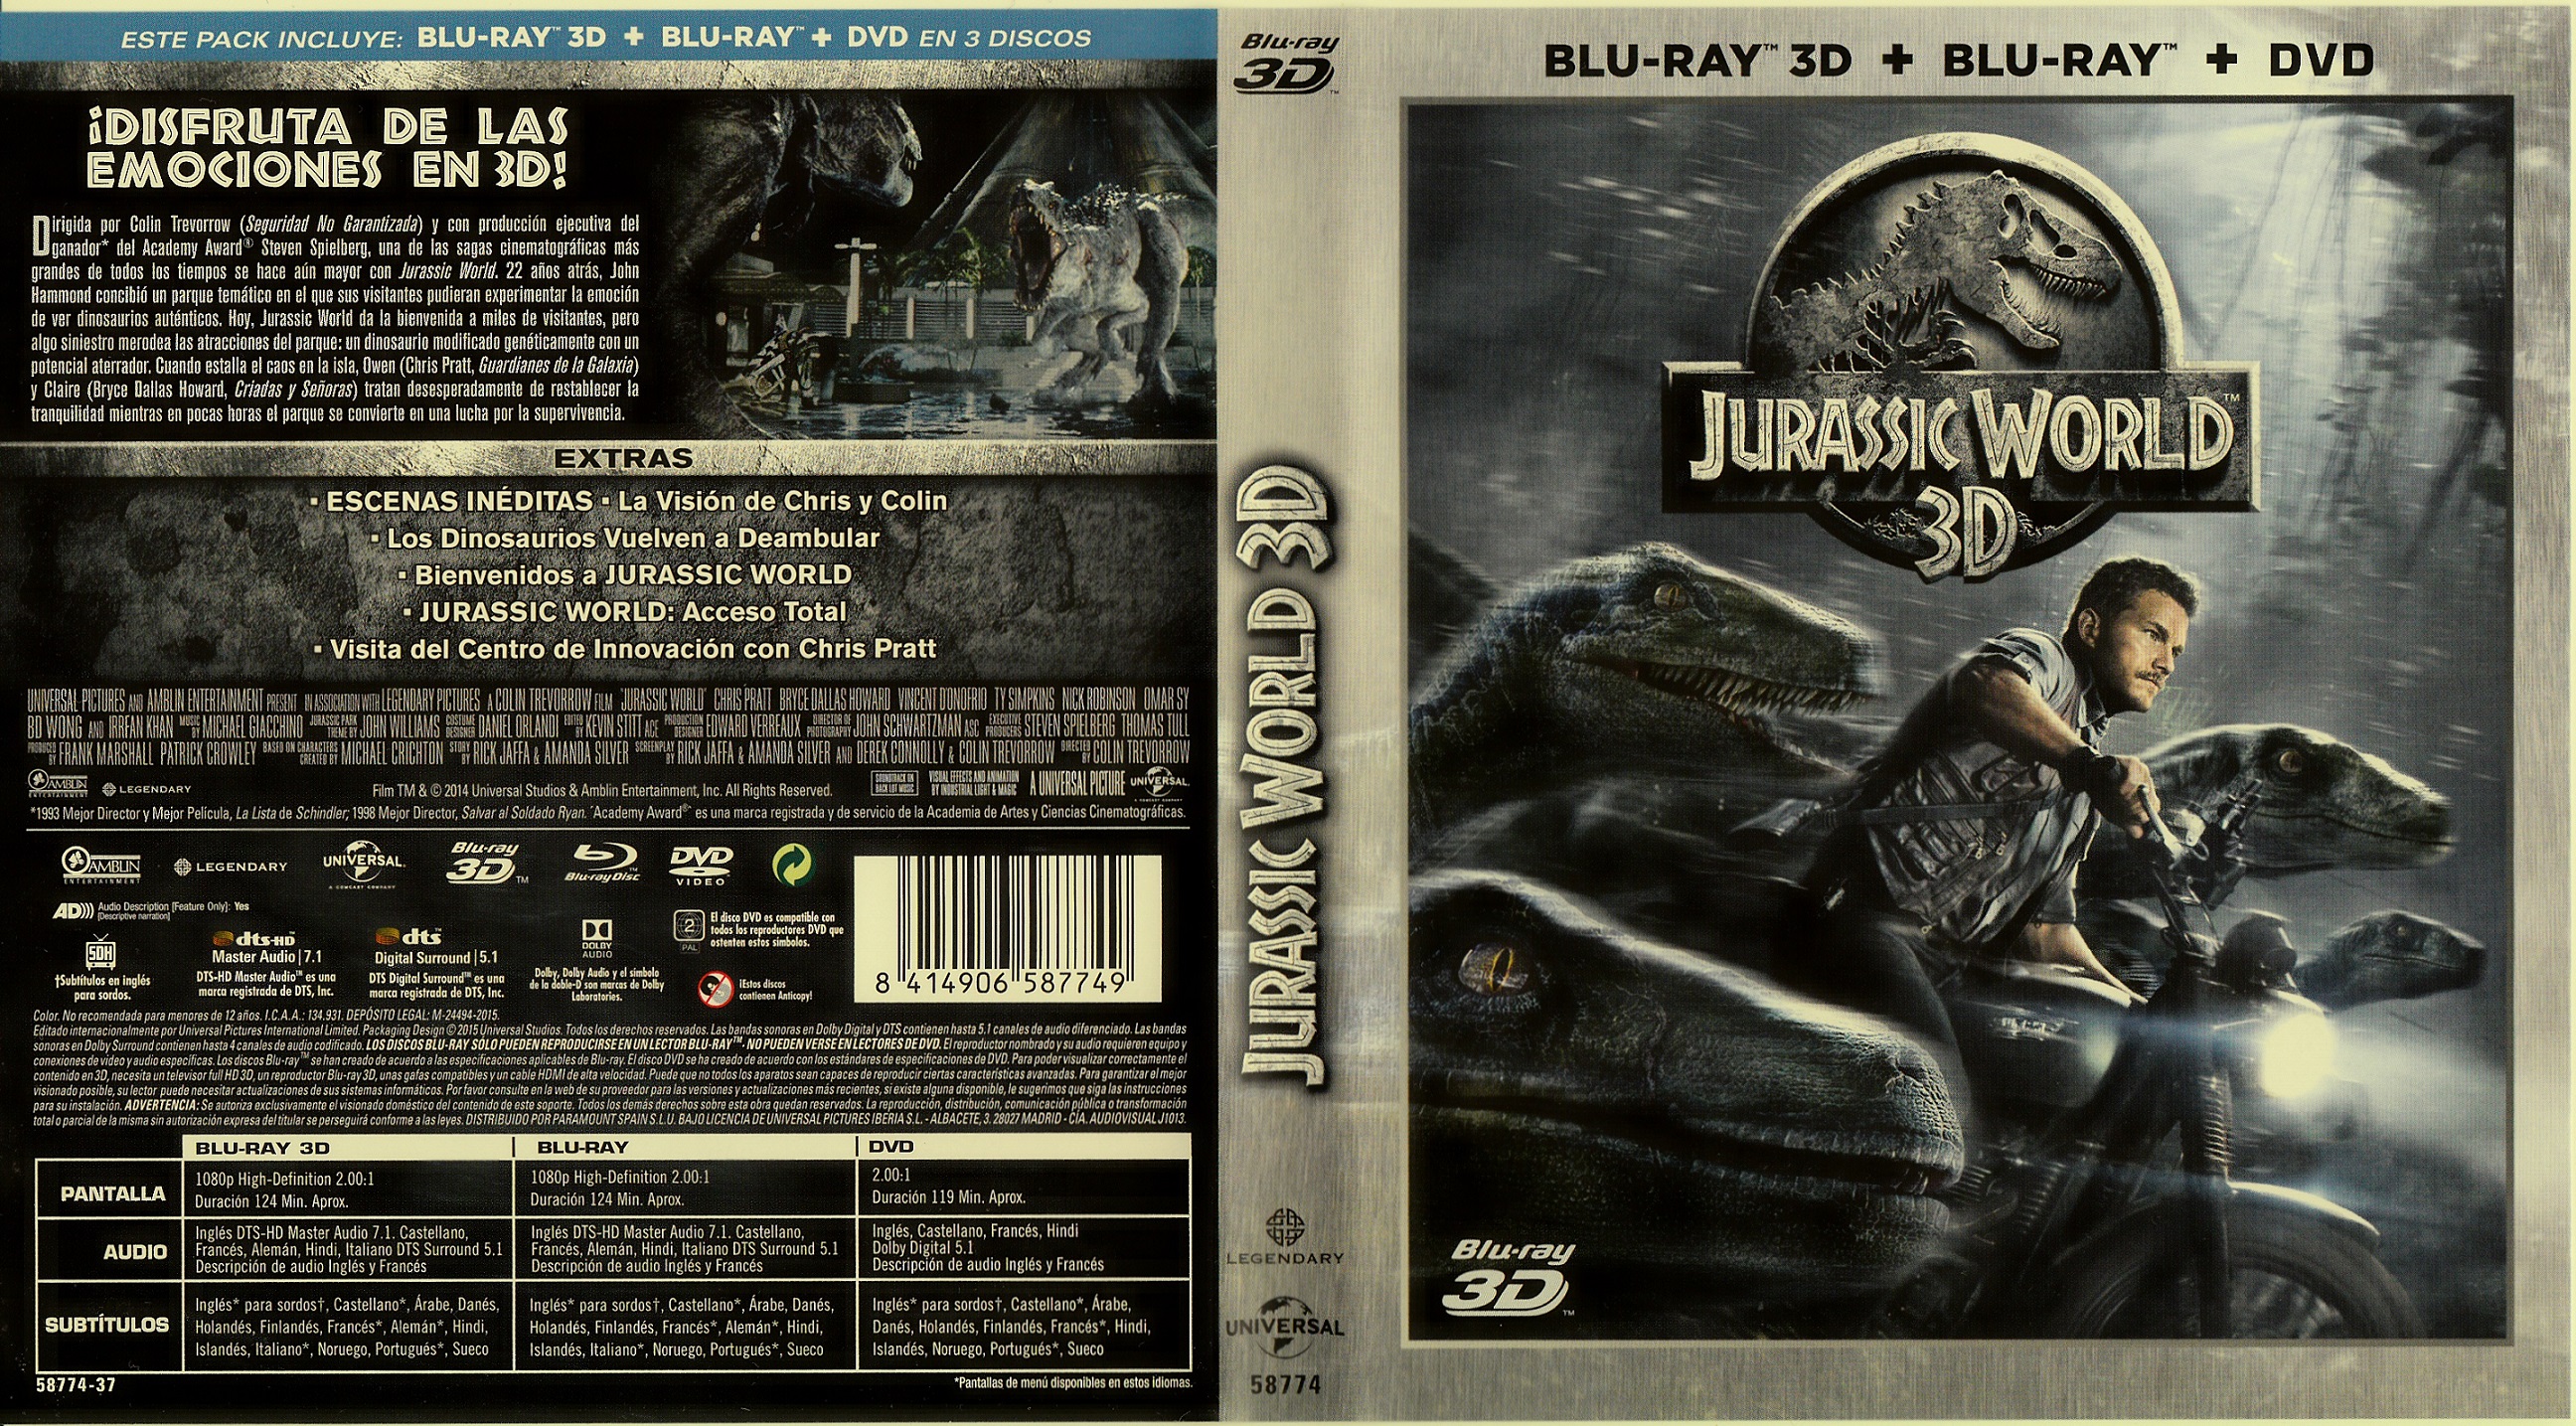 Jurassic World 3D: Portada caratula Blu Ray